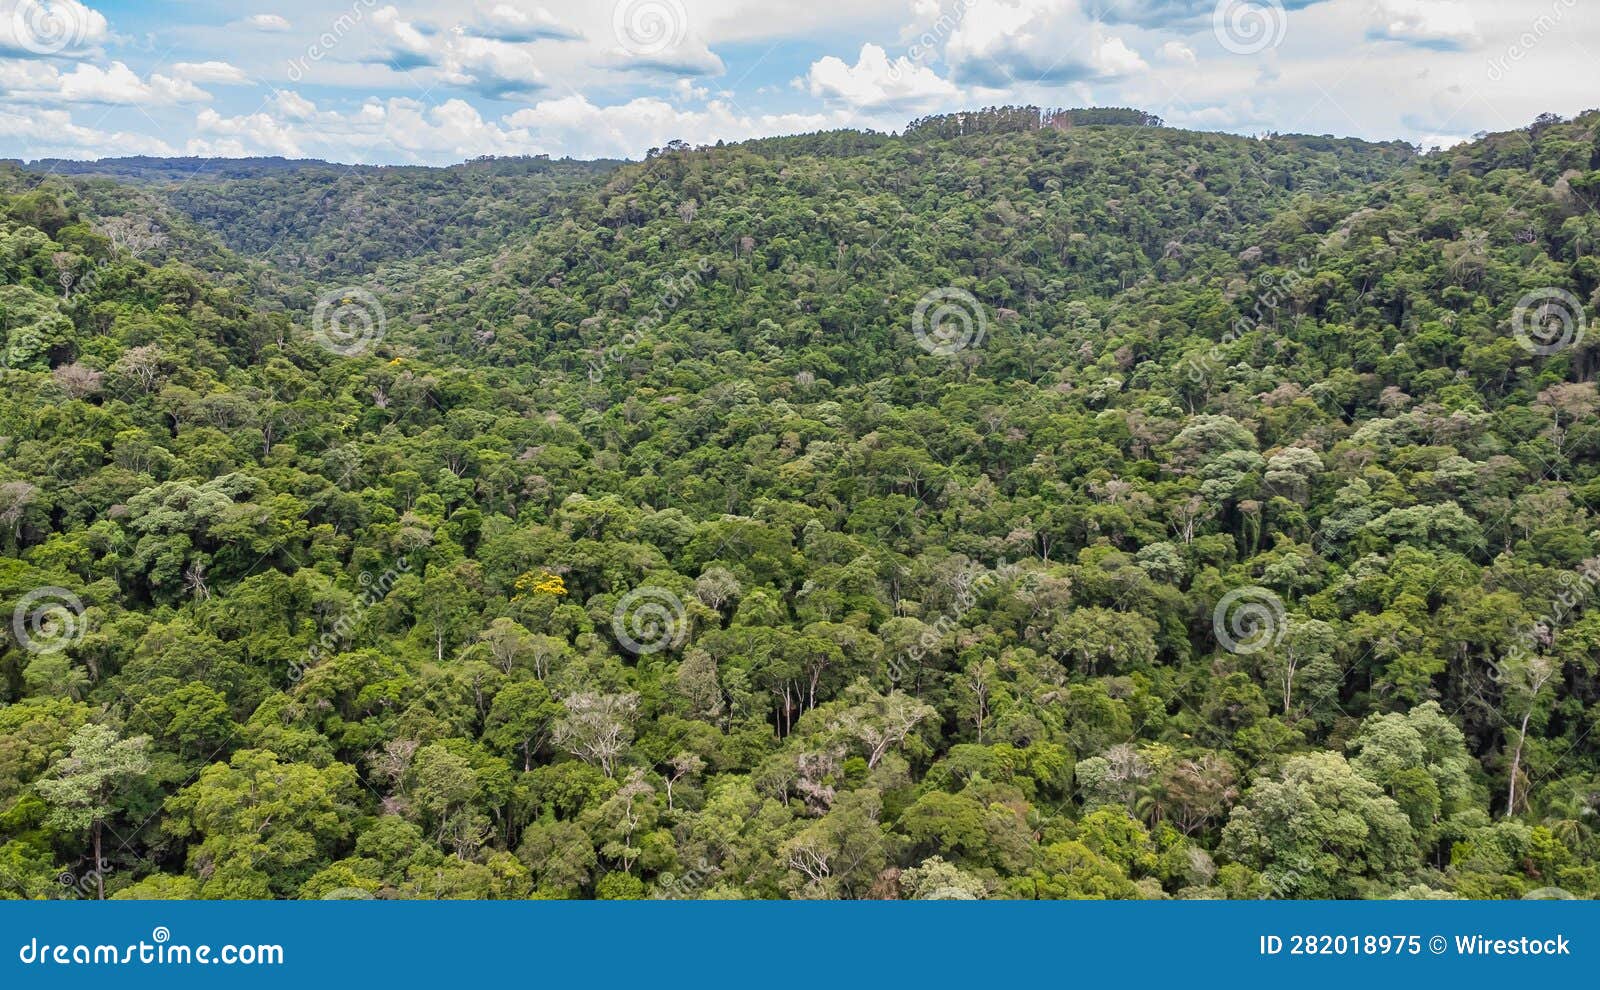 aerial view of dense green forests in salto encantado provincial park, argentina